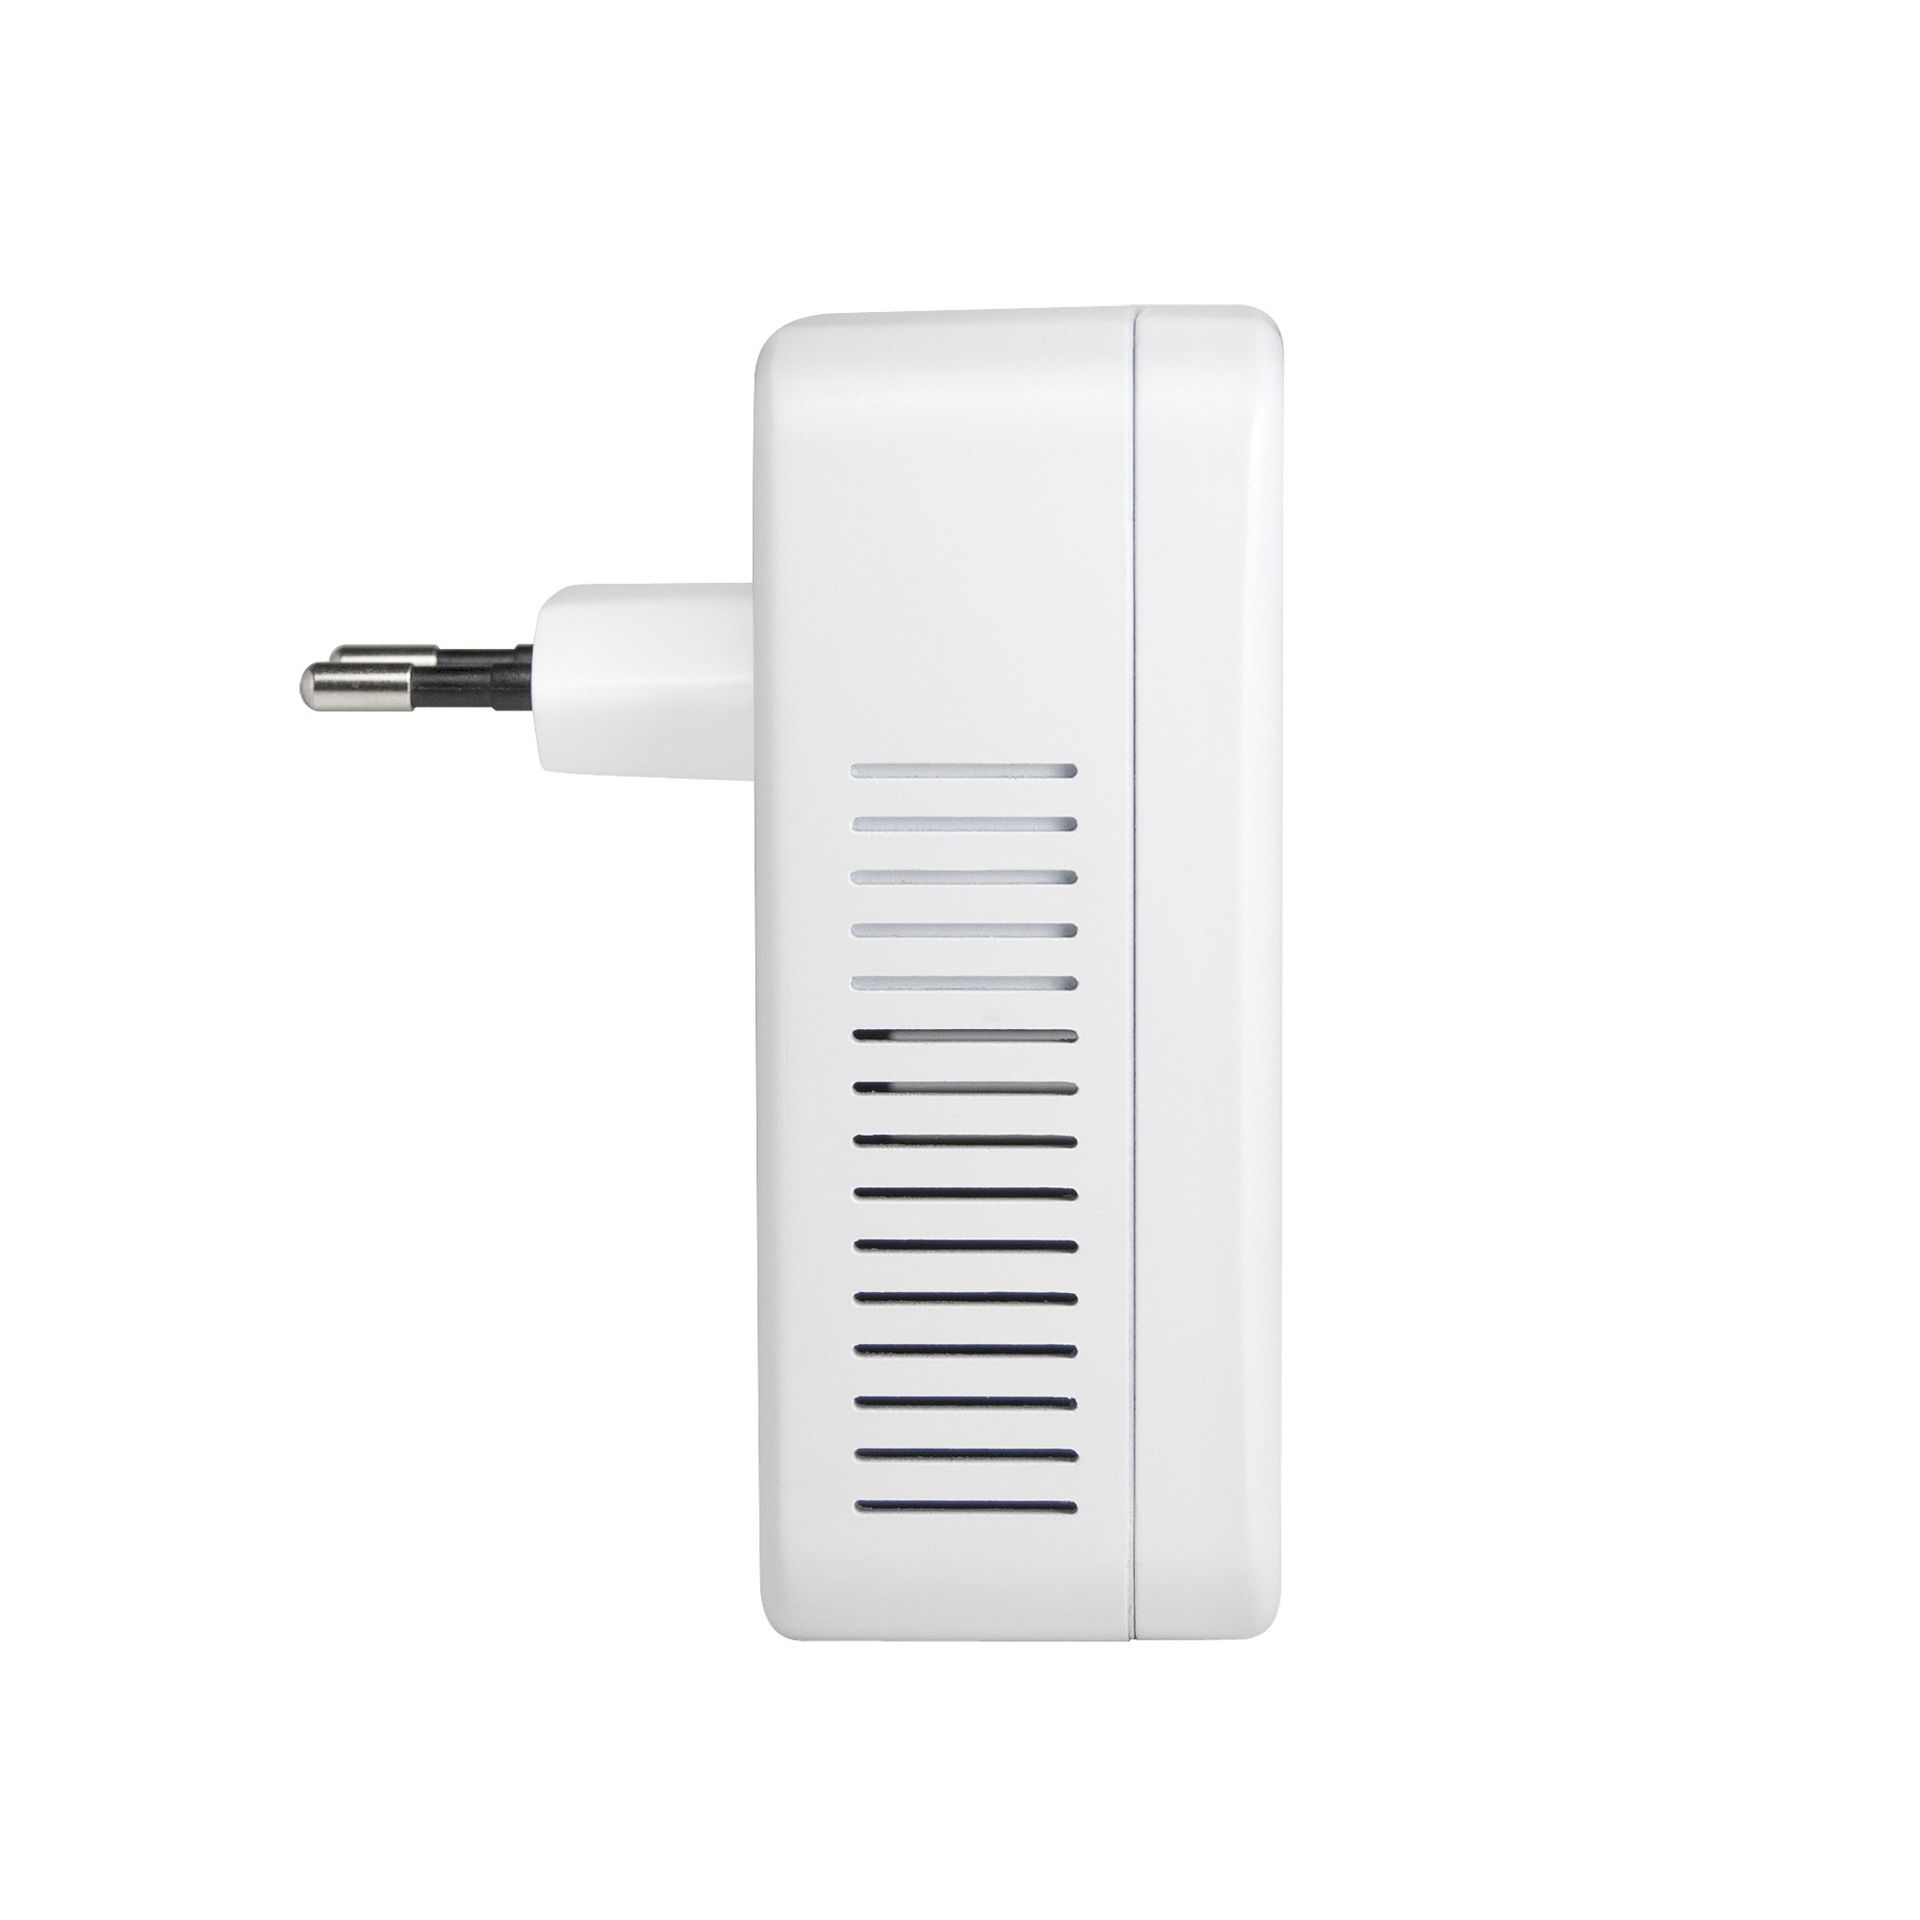 Network-Adapter-Powerline-Ethernet-Adapter-Plug-and-Play-Homeplug-WiFi-Extender-1-Pair-1739563